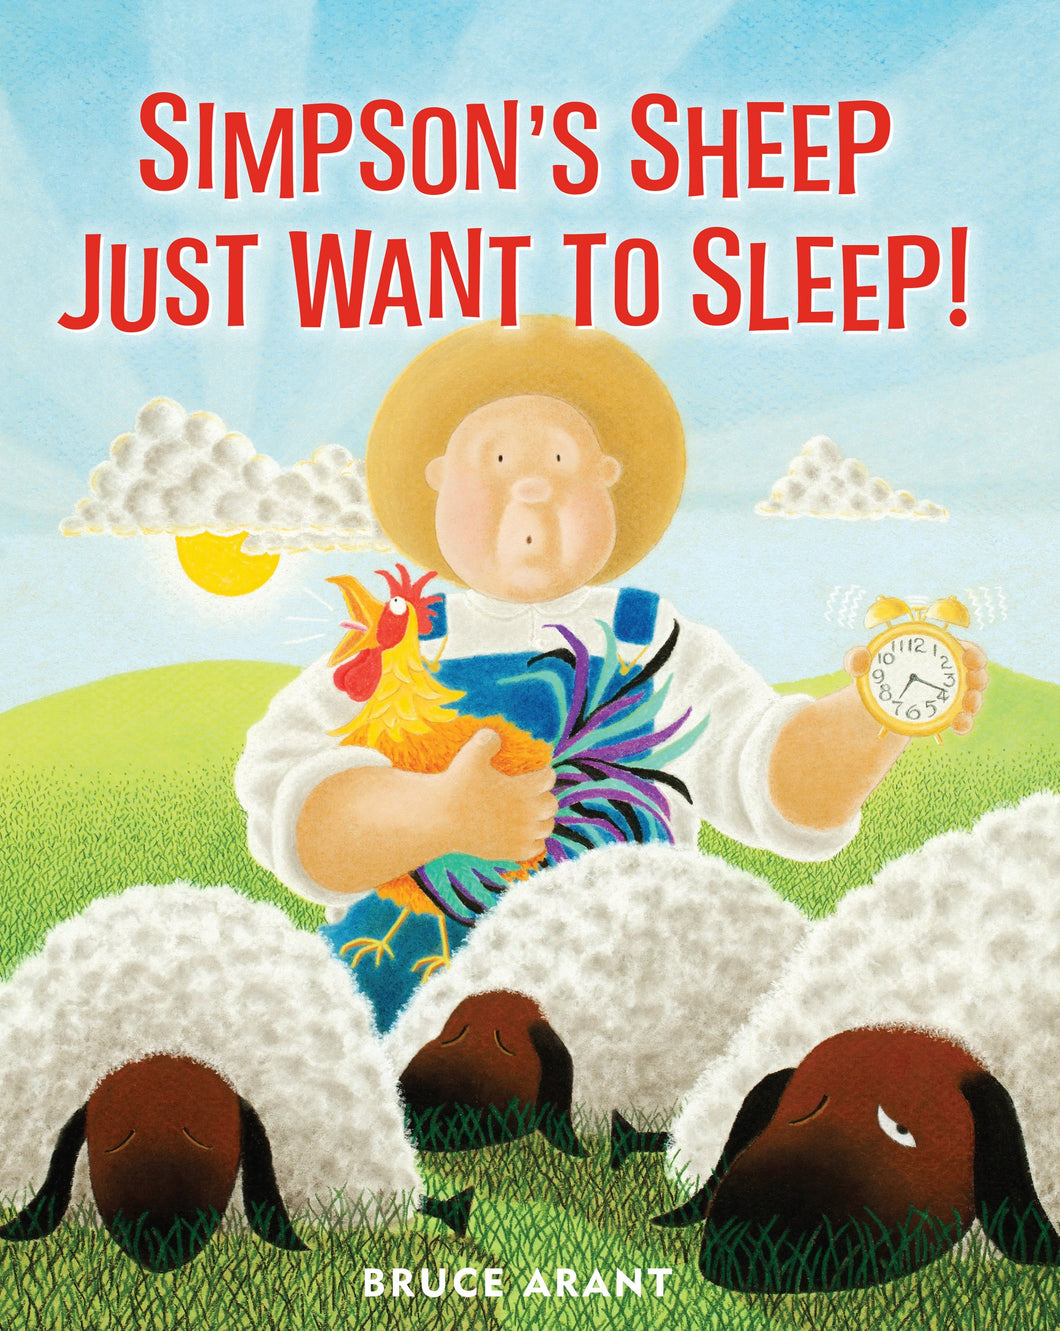 Simpson's Sheep Just Want to Sleep - Bruce Arant